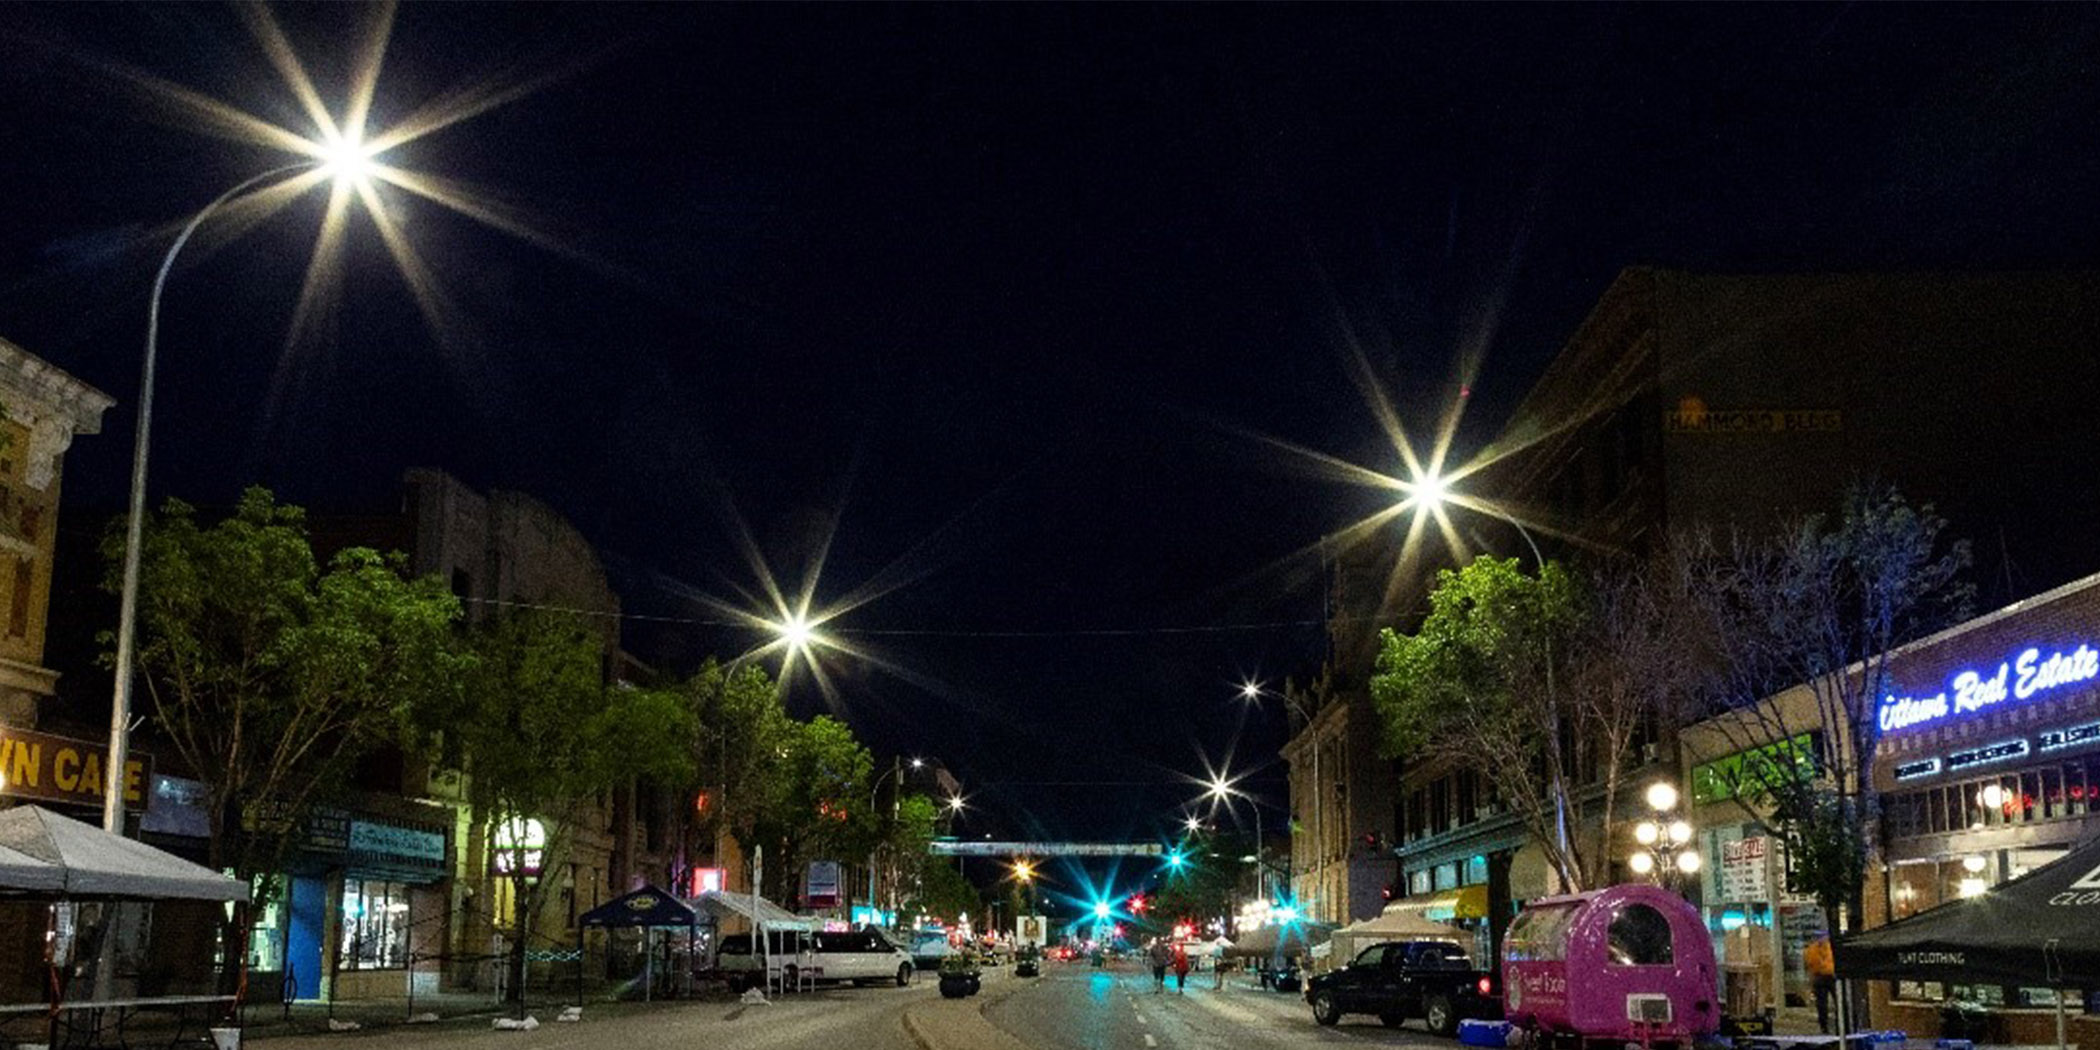 LED streetlights shiny bright over a city street